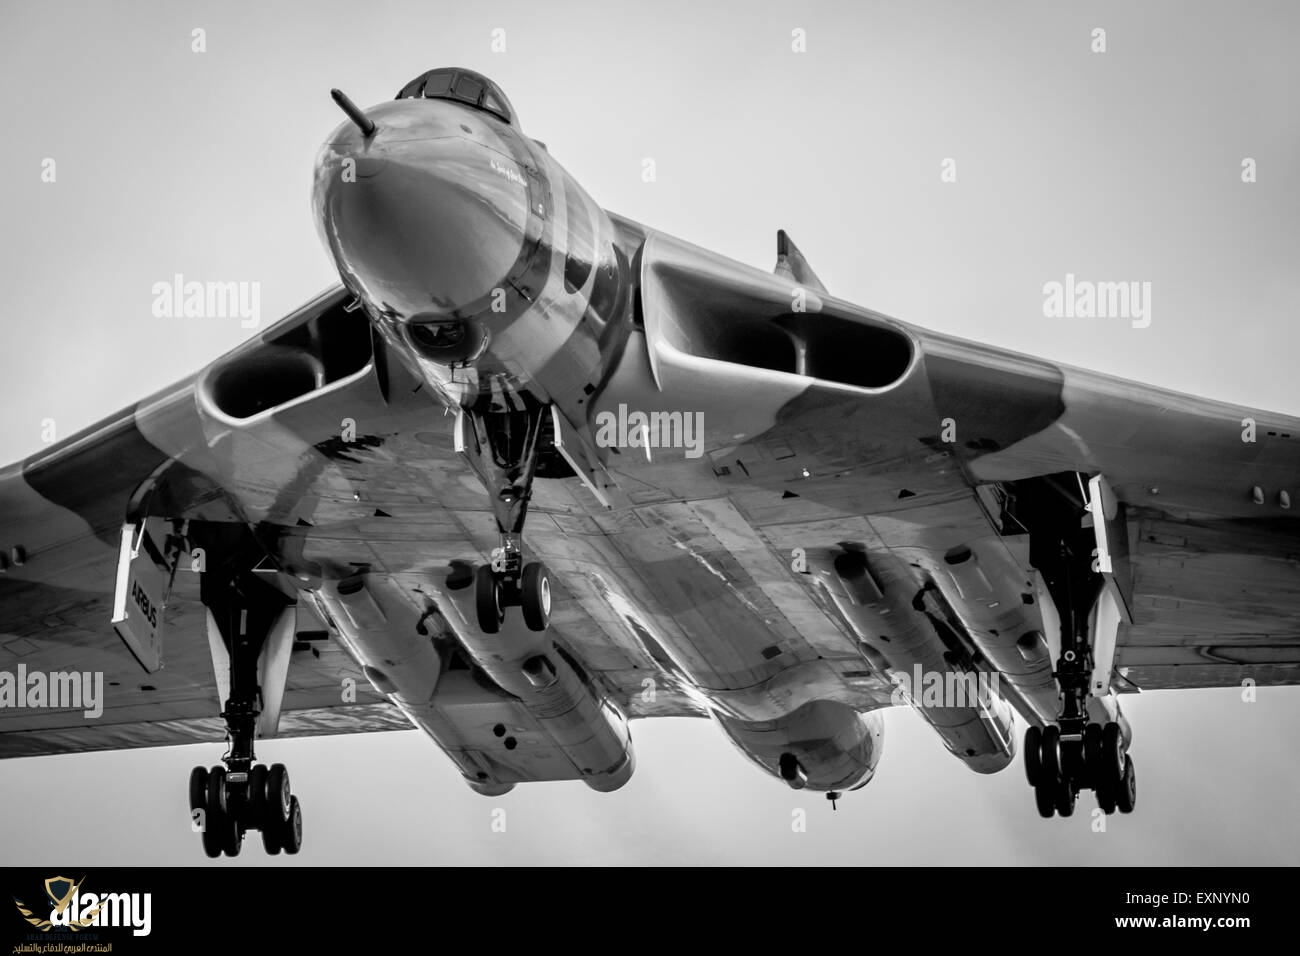 avro-vulcan-xh558-spirit-of-great-britain-the-last-flying-vulcan-bomber-EXNYN0.jpg